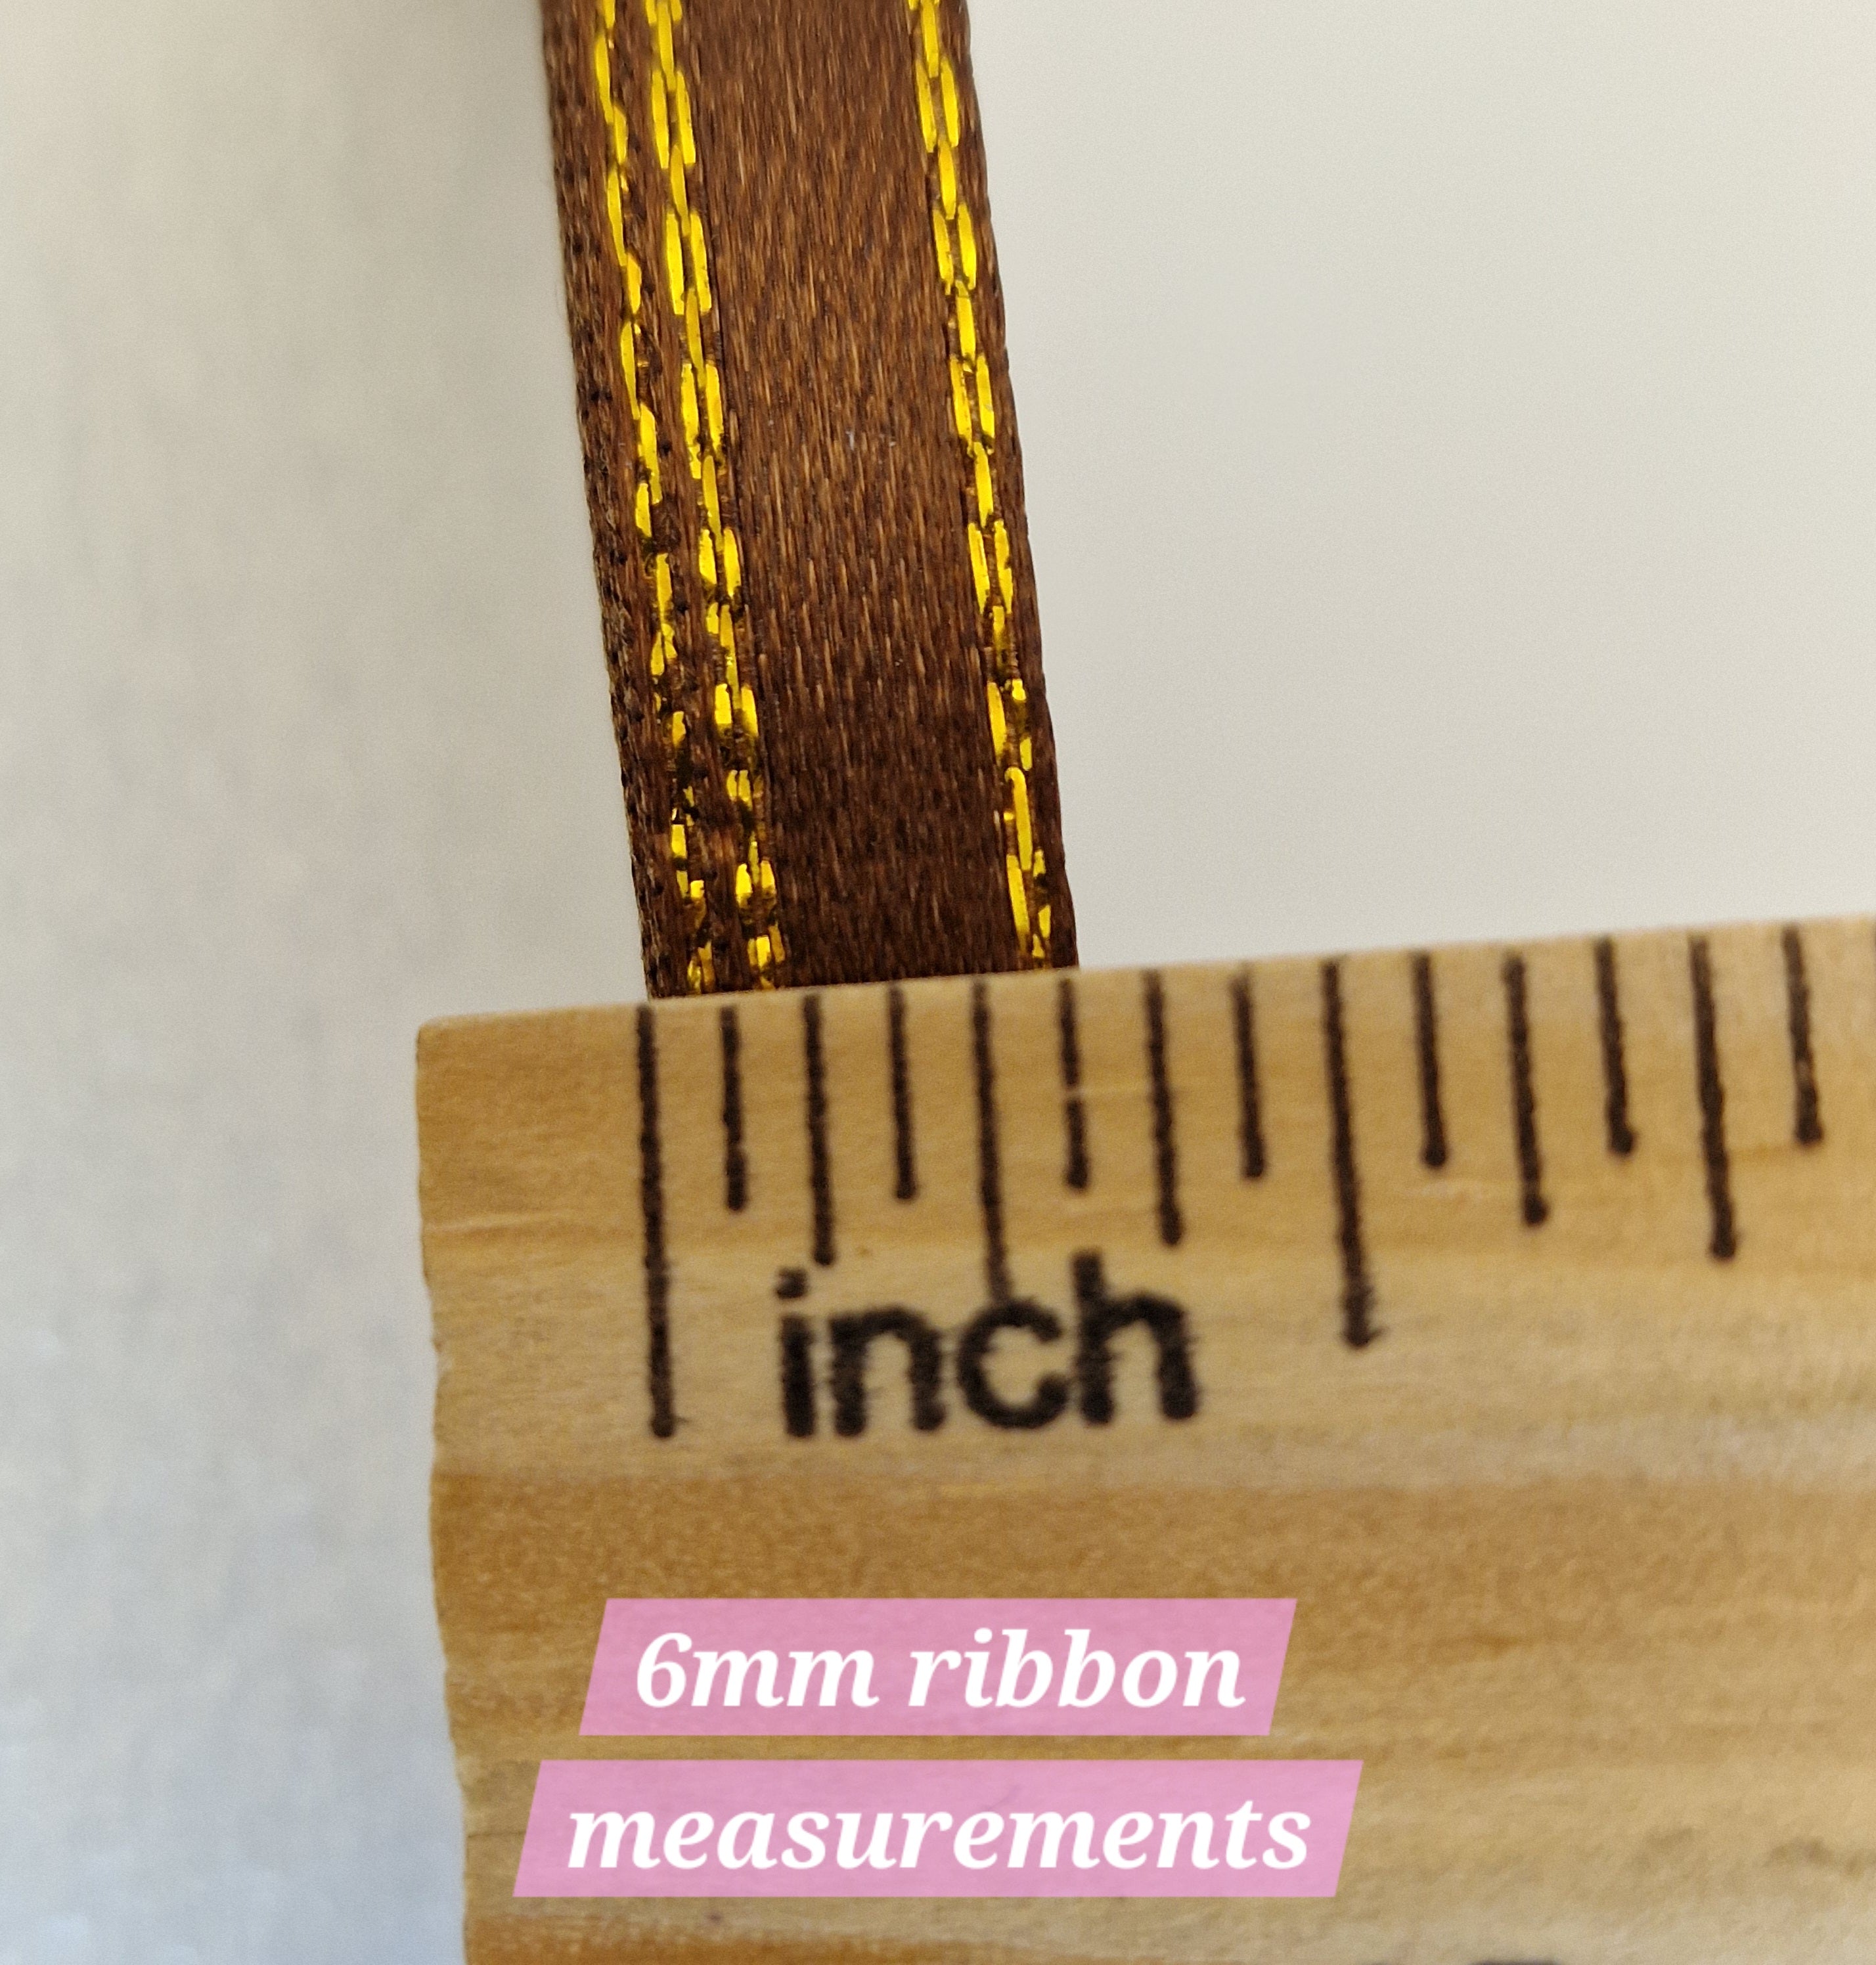 MajorCrafts 6mm 22metres Cream with Gold Edge Trim Satin Fabric Ribbon Roll